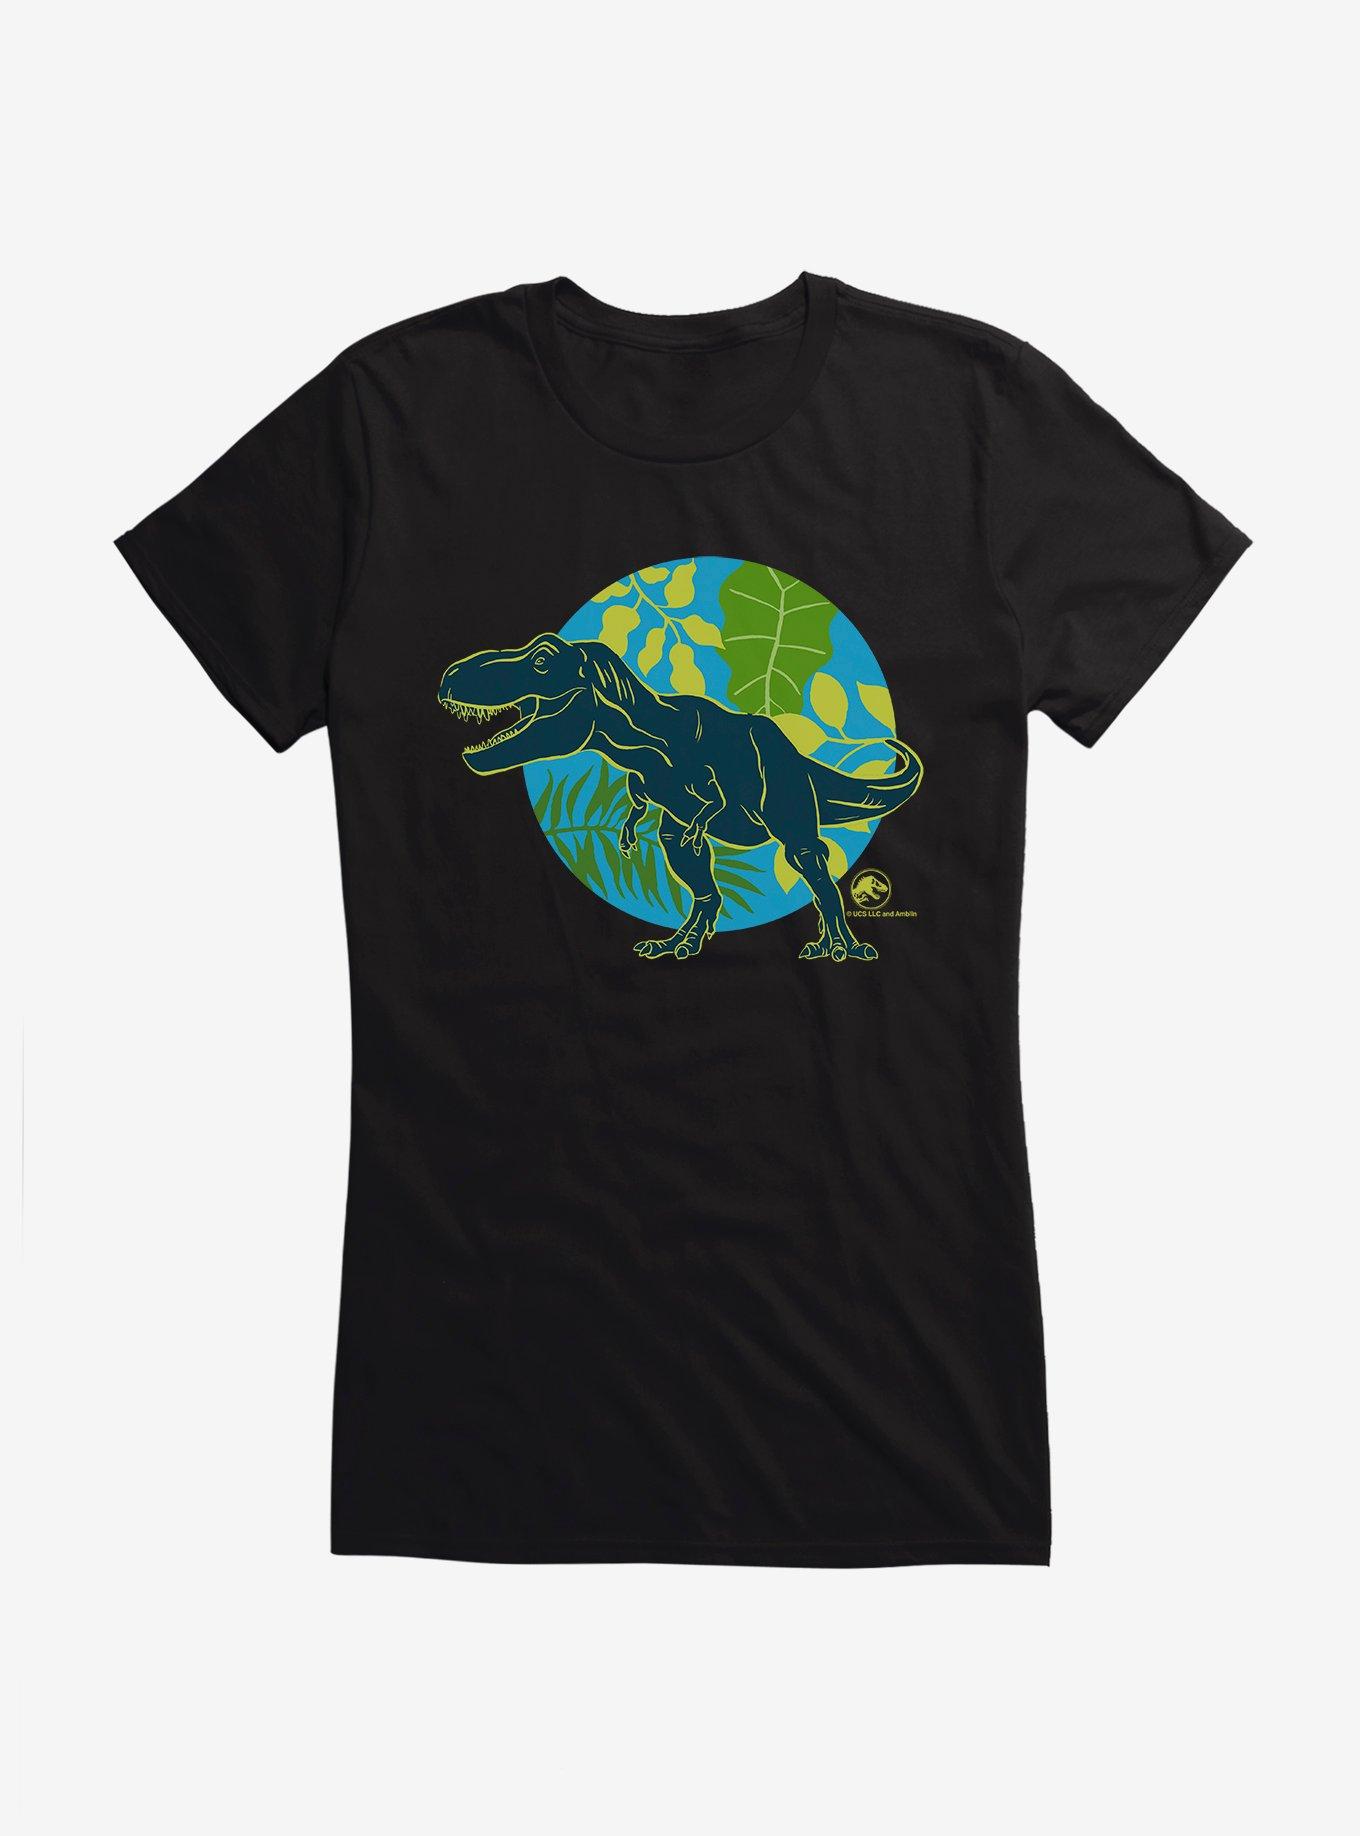 Jurassic World T-Rex Earth Habitat Girls T-Shirt